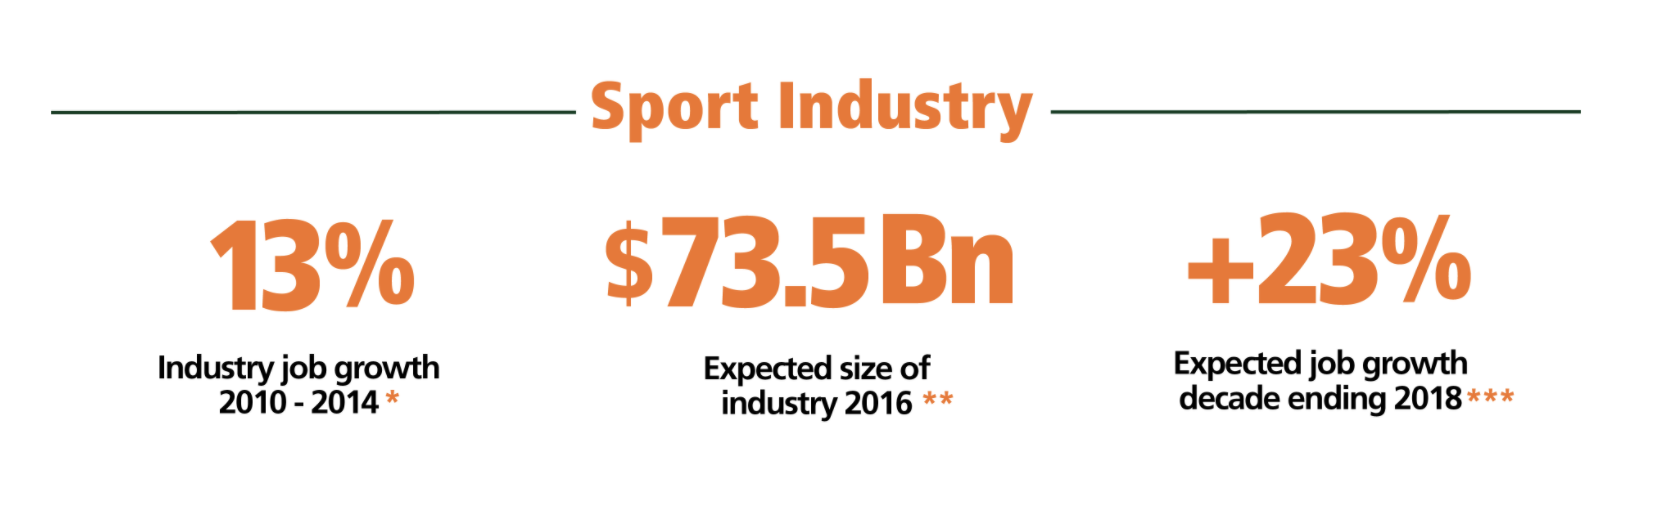 Sport industry stat